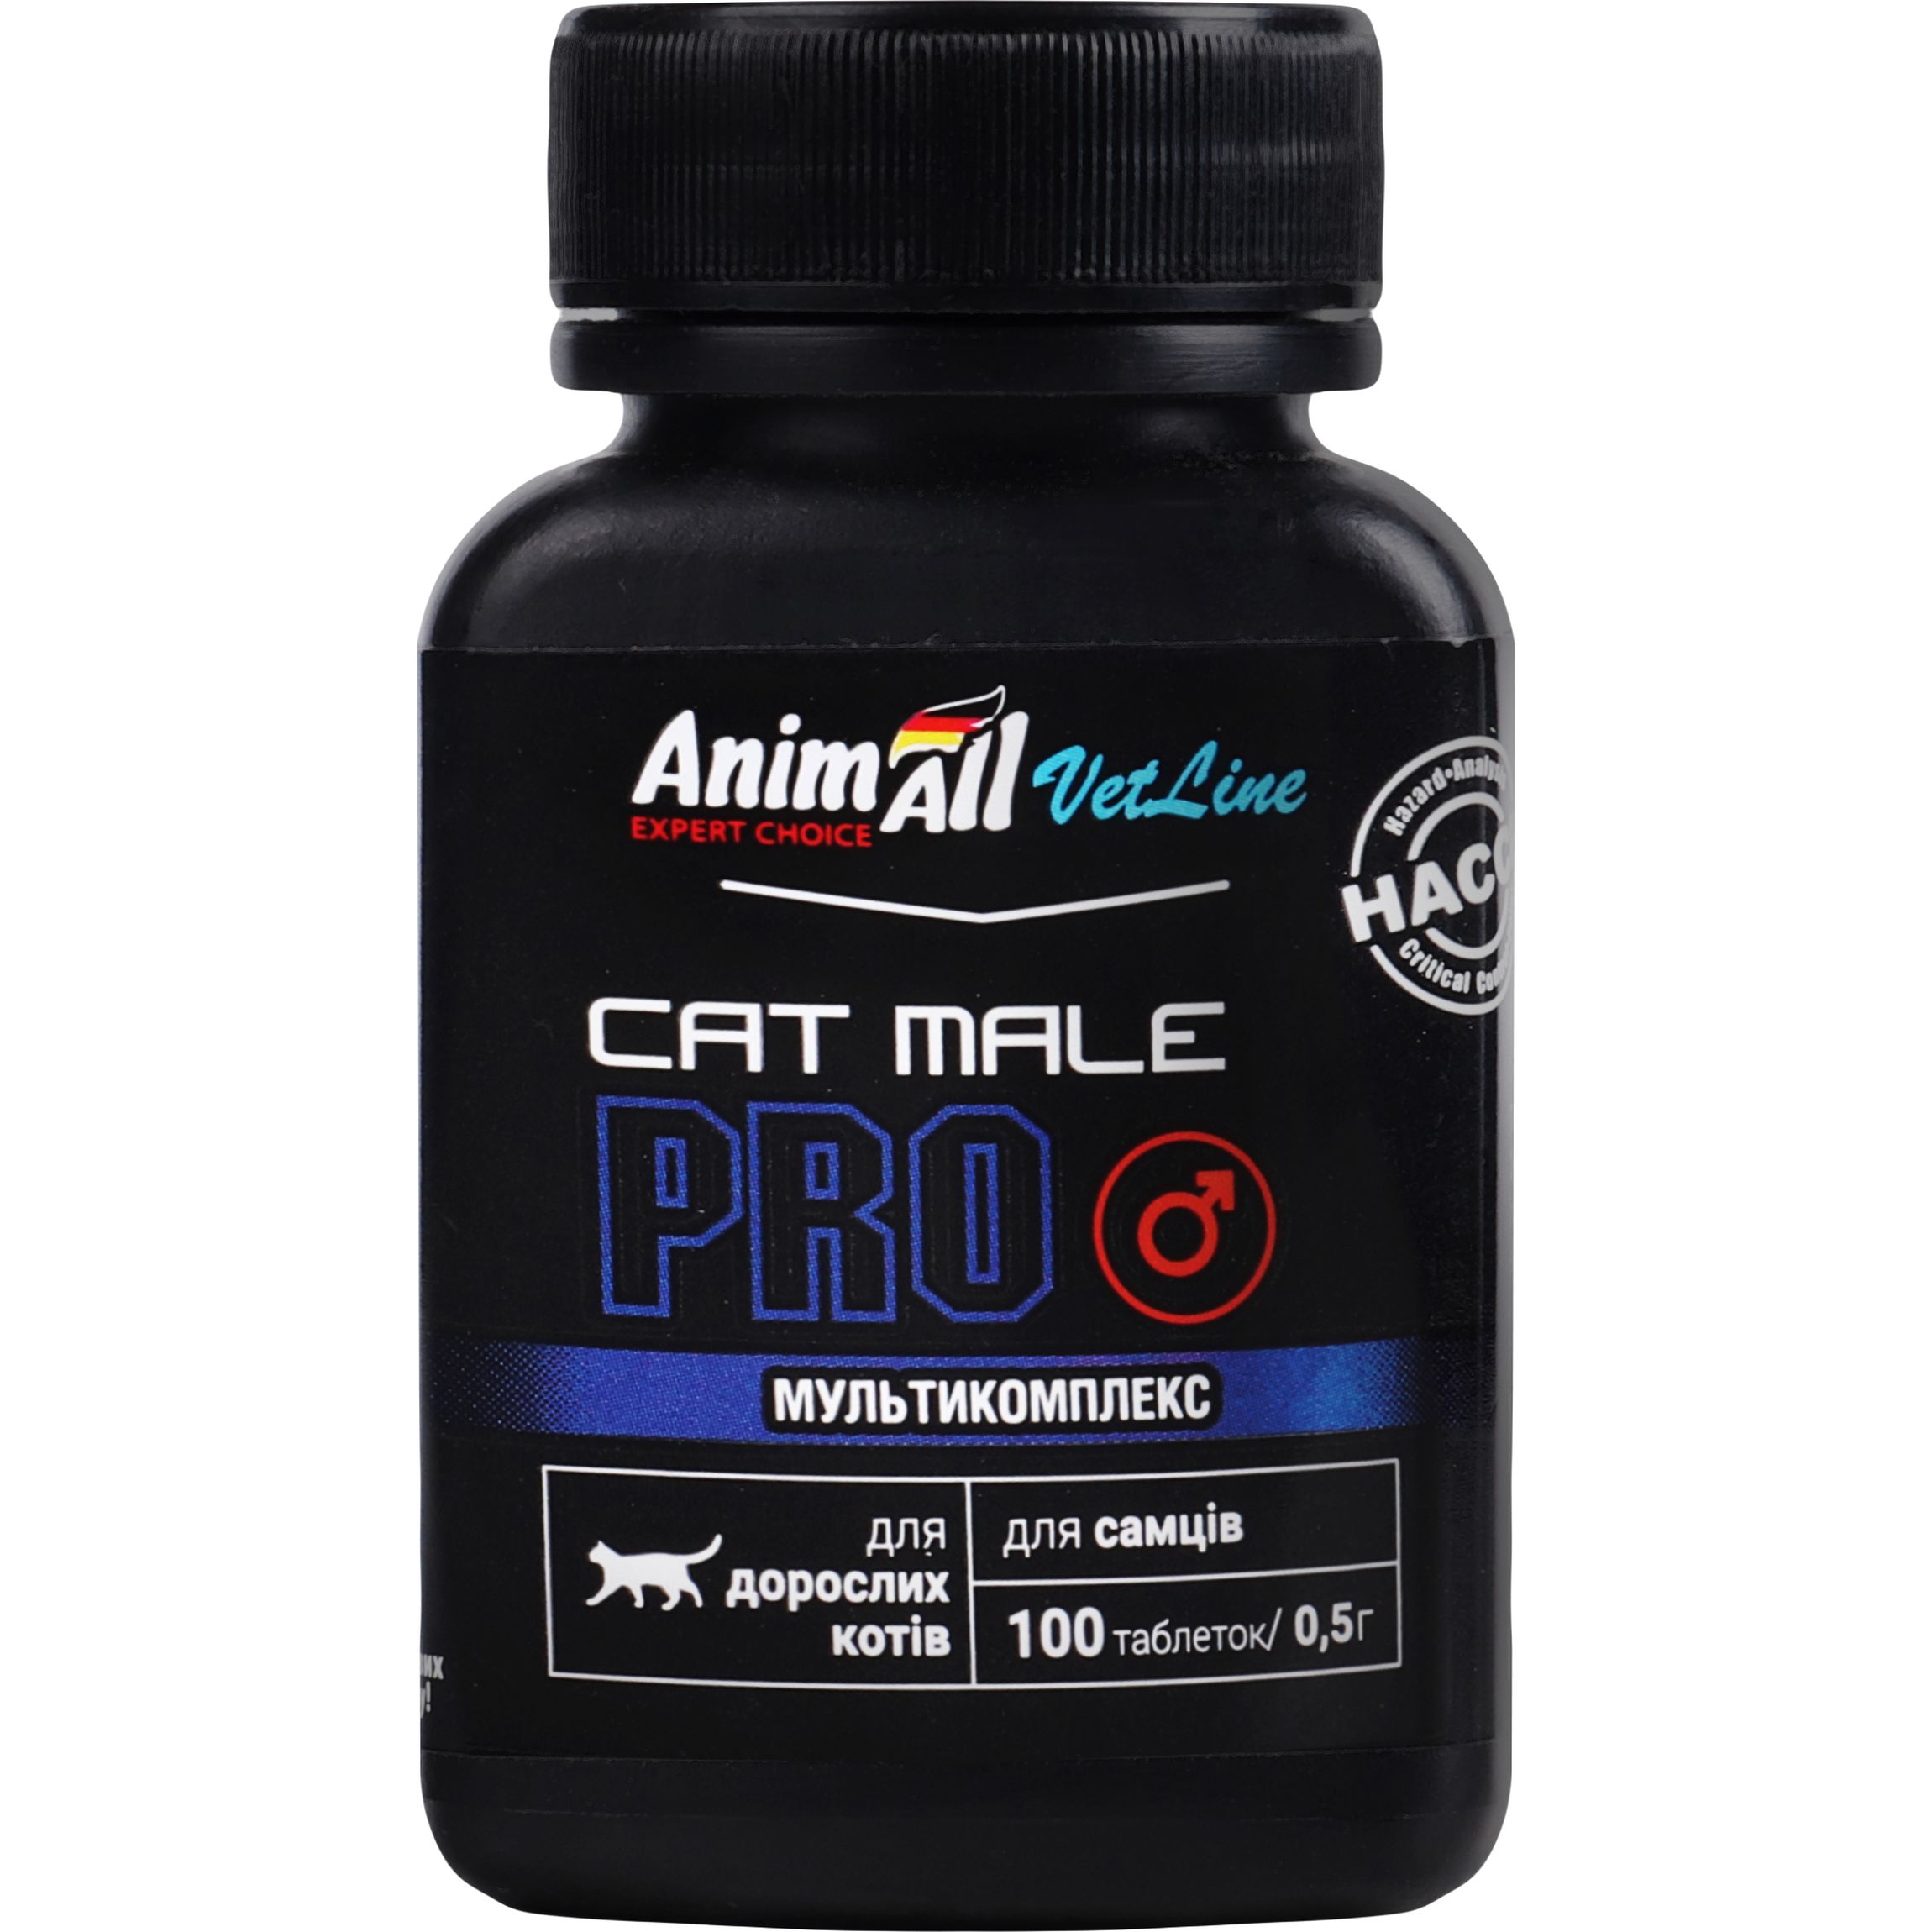 Витаминная добавка AnimAll VetLine Cat Male PRO для взрослых кошек 100 таблеток - фото 1